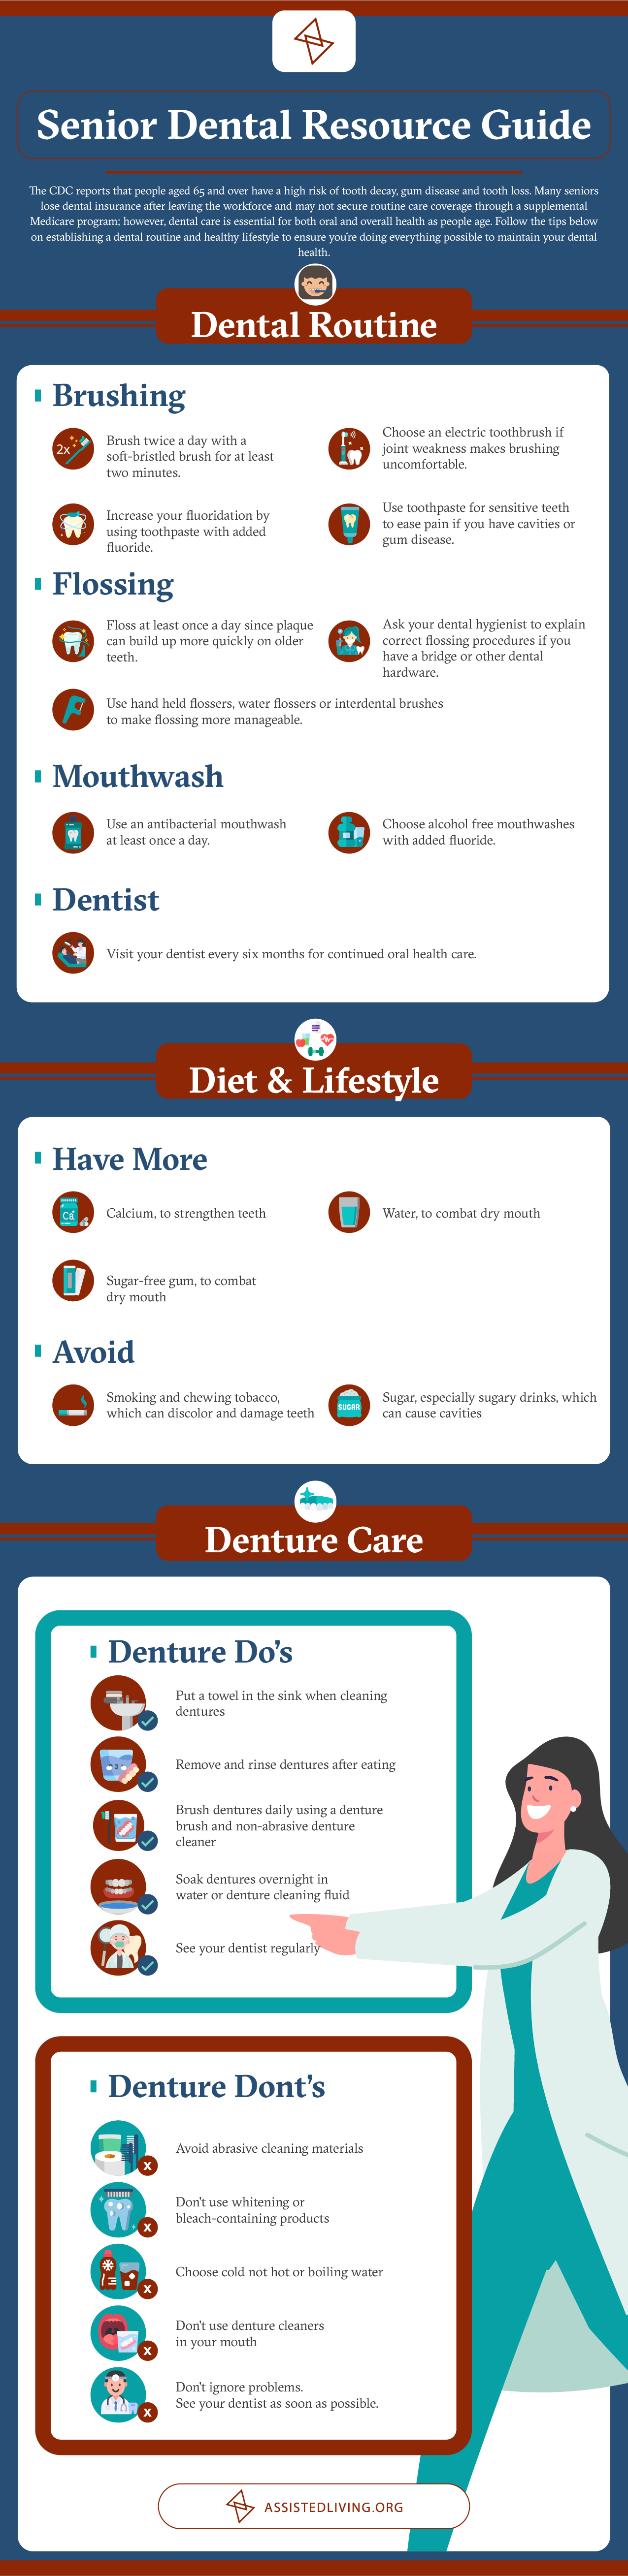 Tips to Help Seniors Maintain Good Oral Hygiene